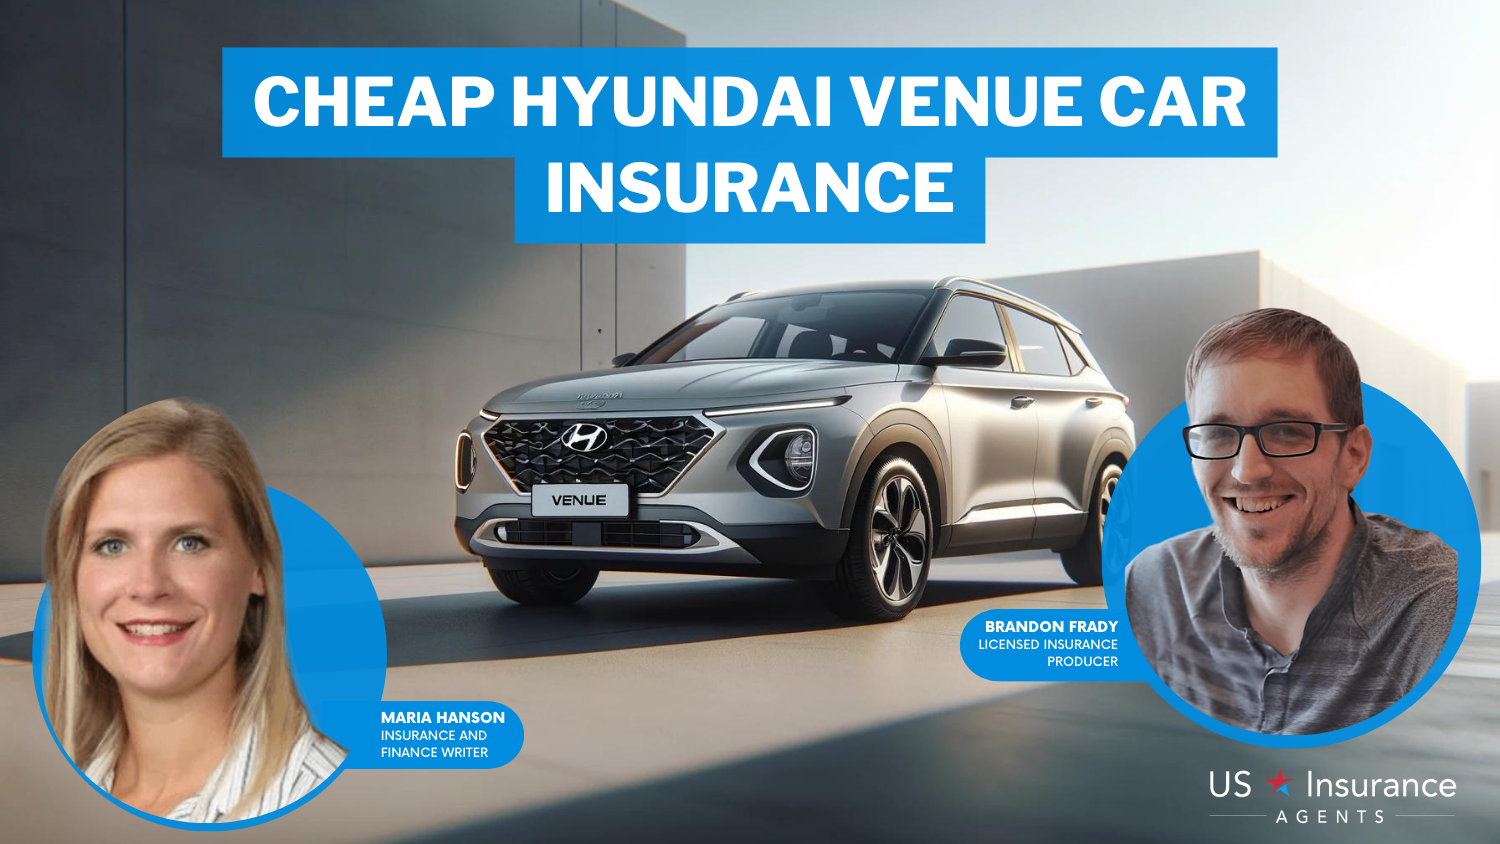 Cheap Hyundai Venue Car Insurance: State Farm, USAA, and Progressive